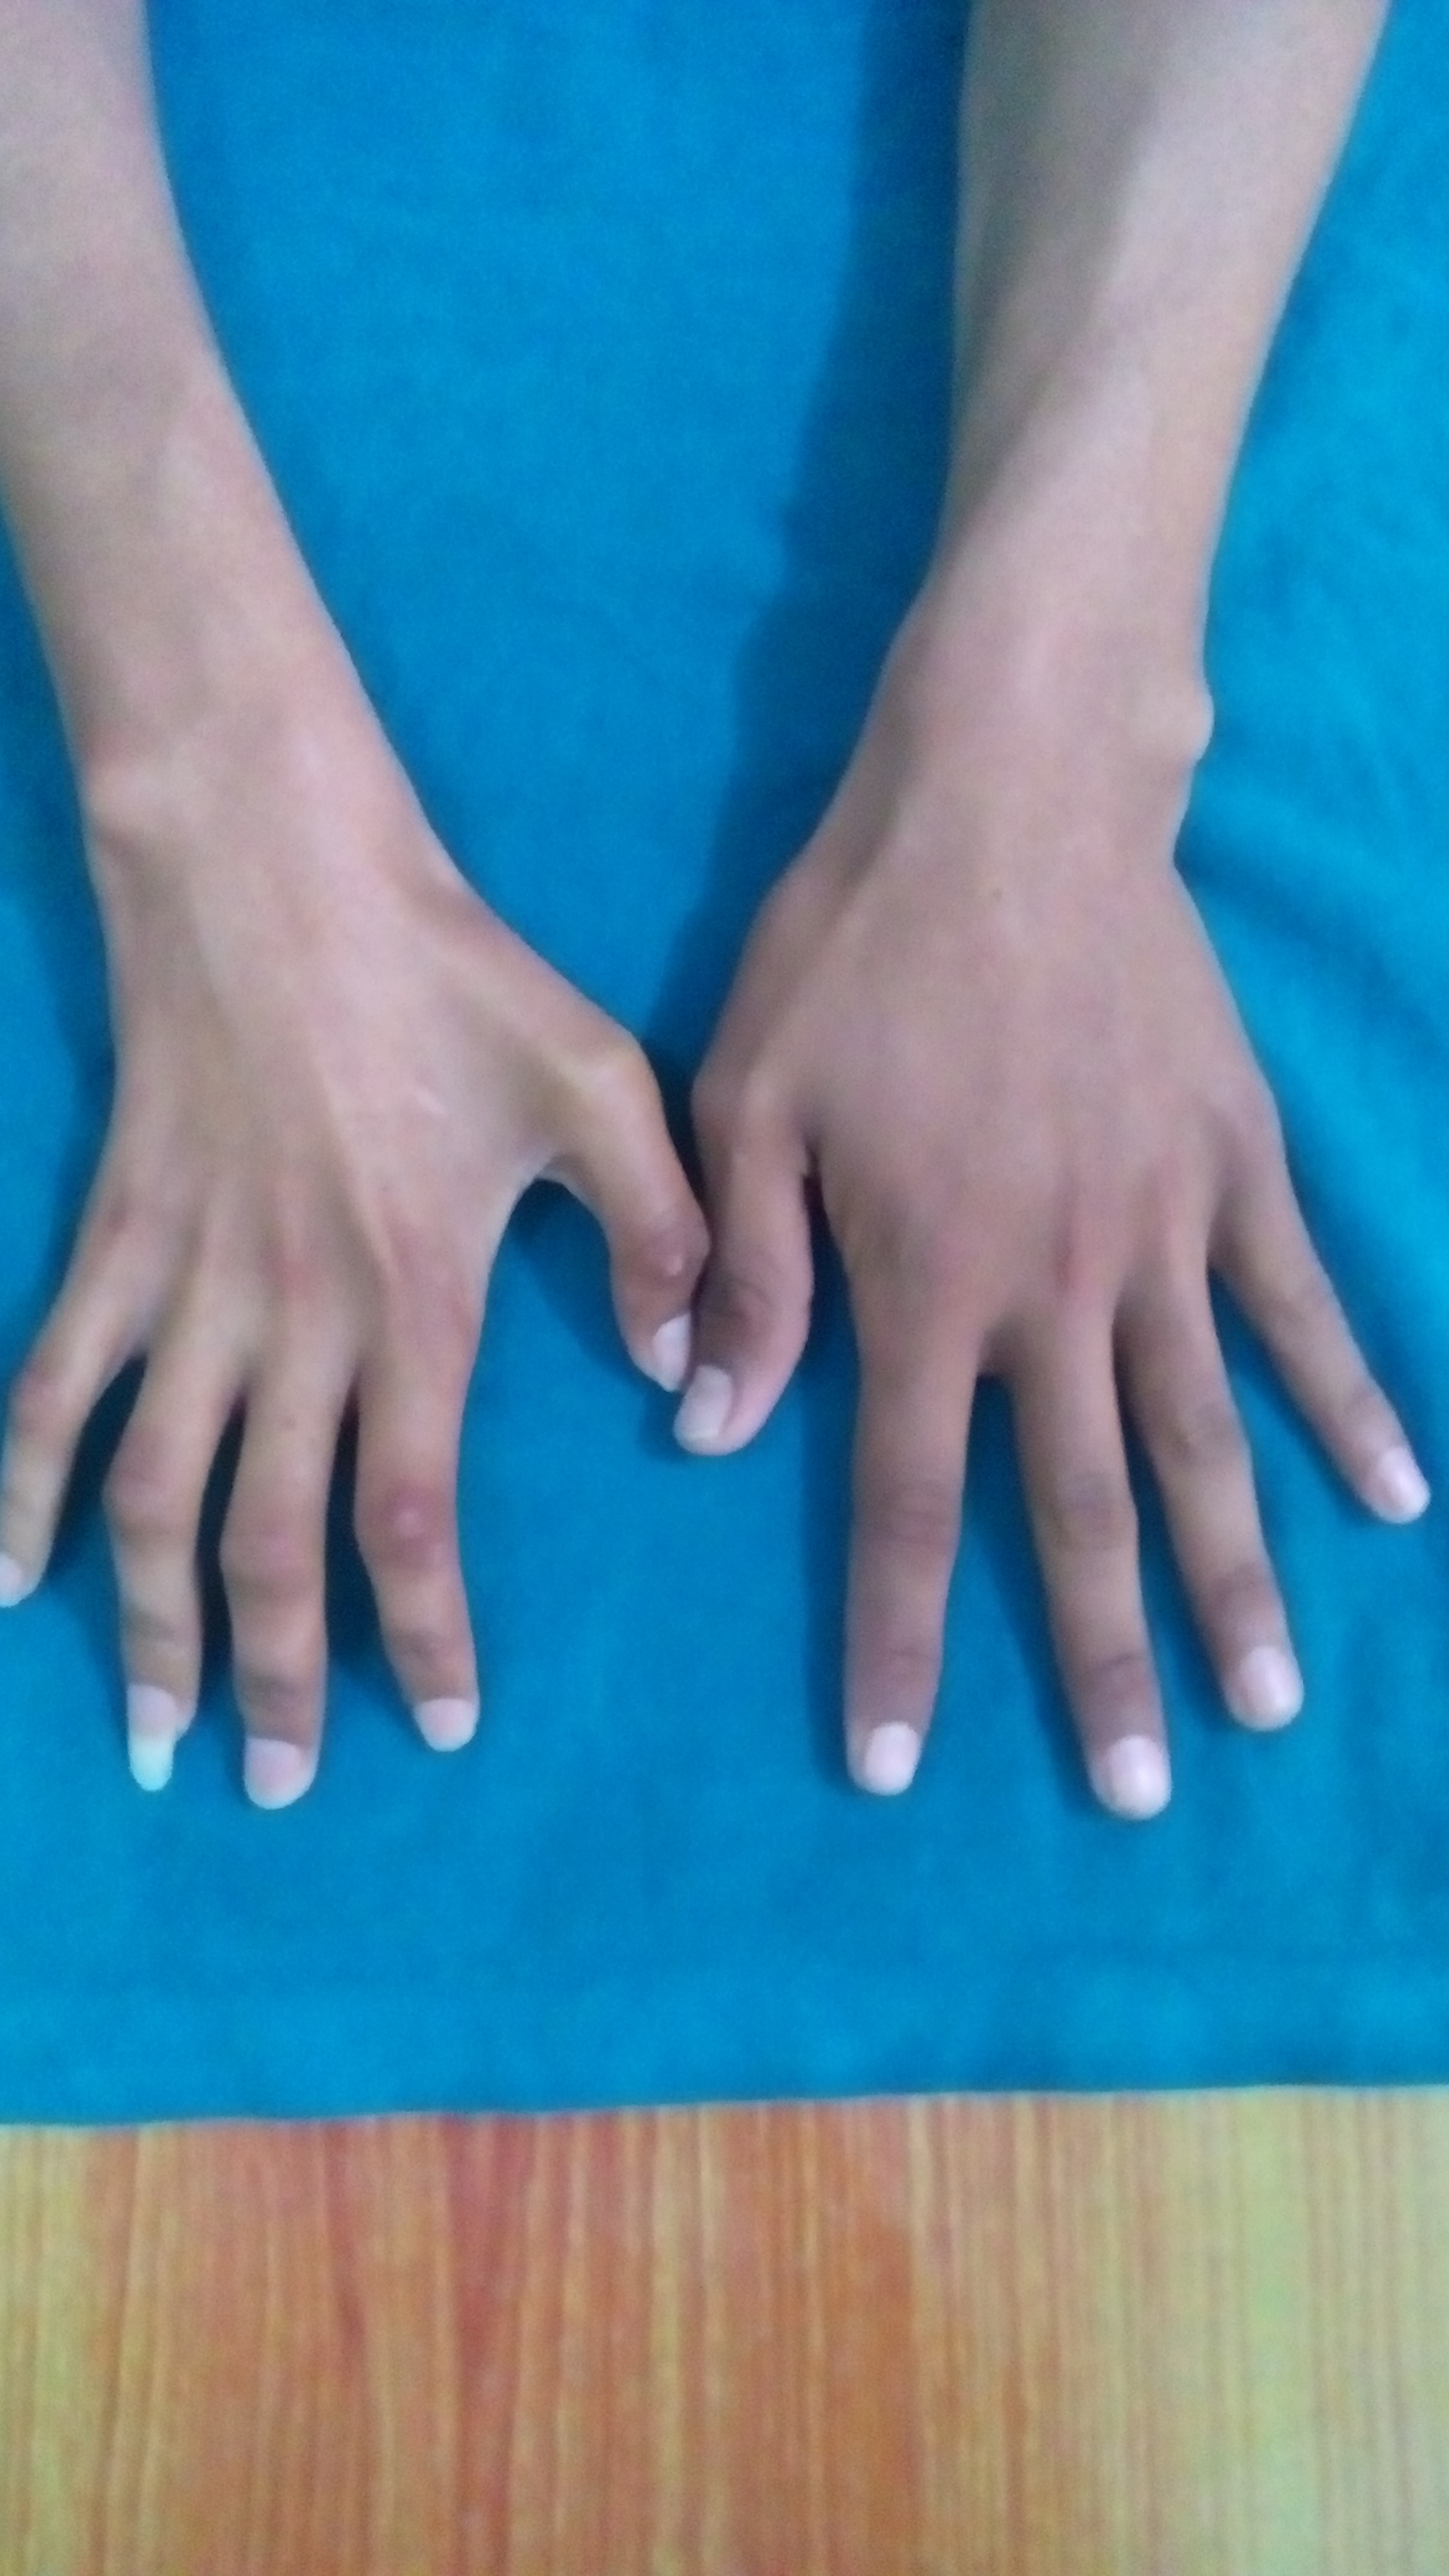 Claw hand in Hirayama disease